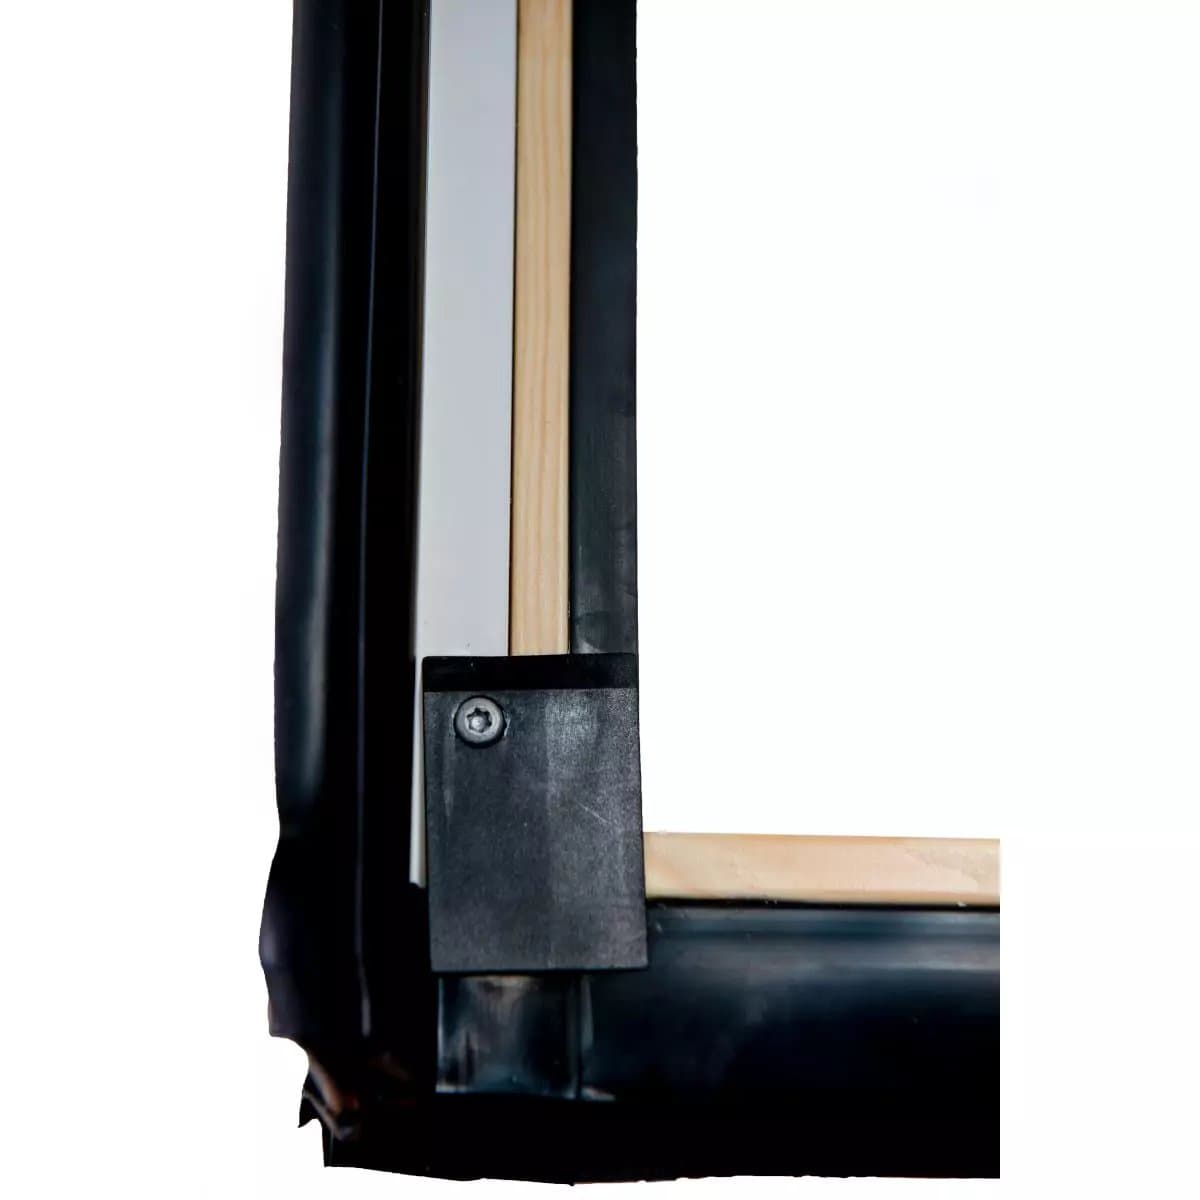 Окно мансардное деревянное Designo R79 H200. 2 камерное. Ручка снизу. ThermoBlock WD.